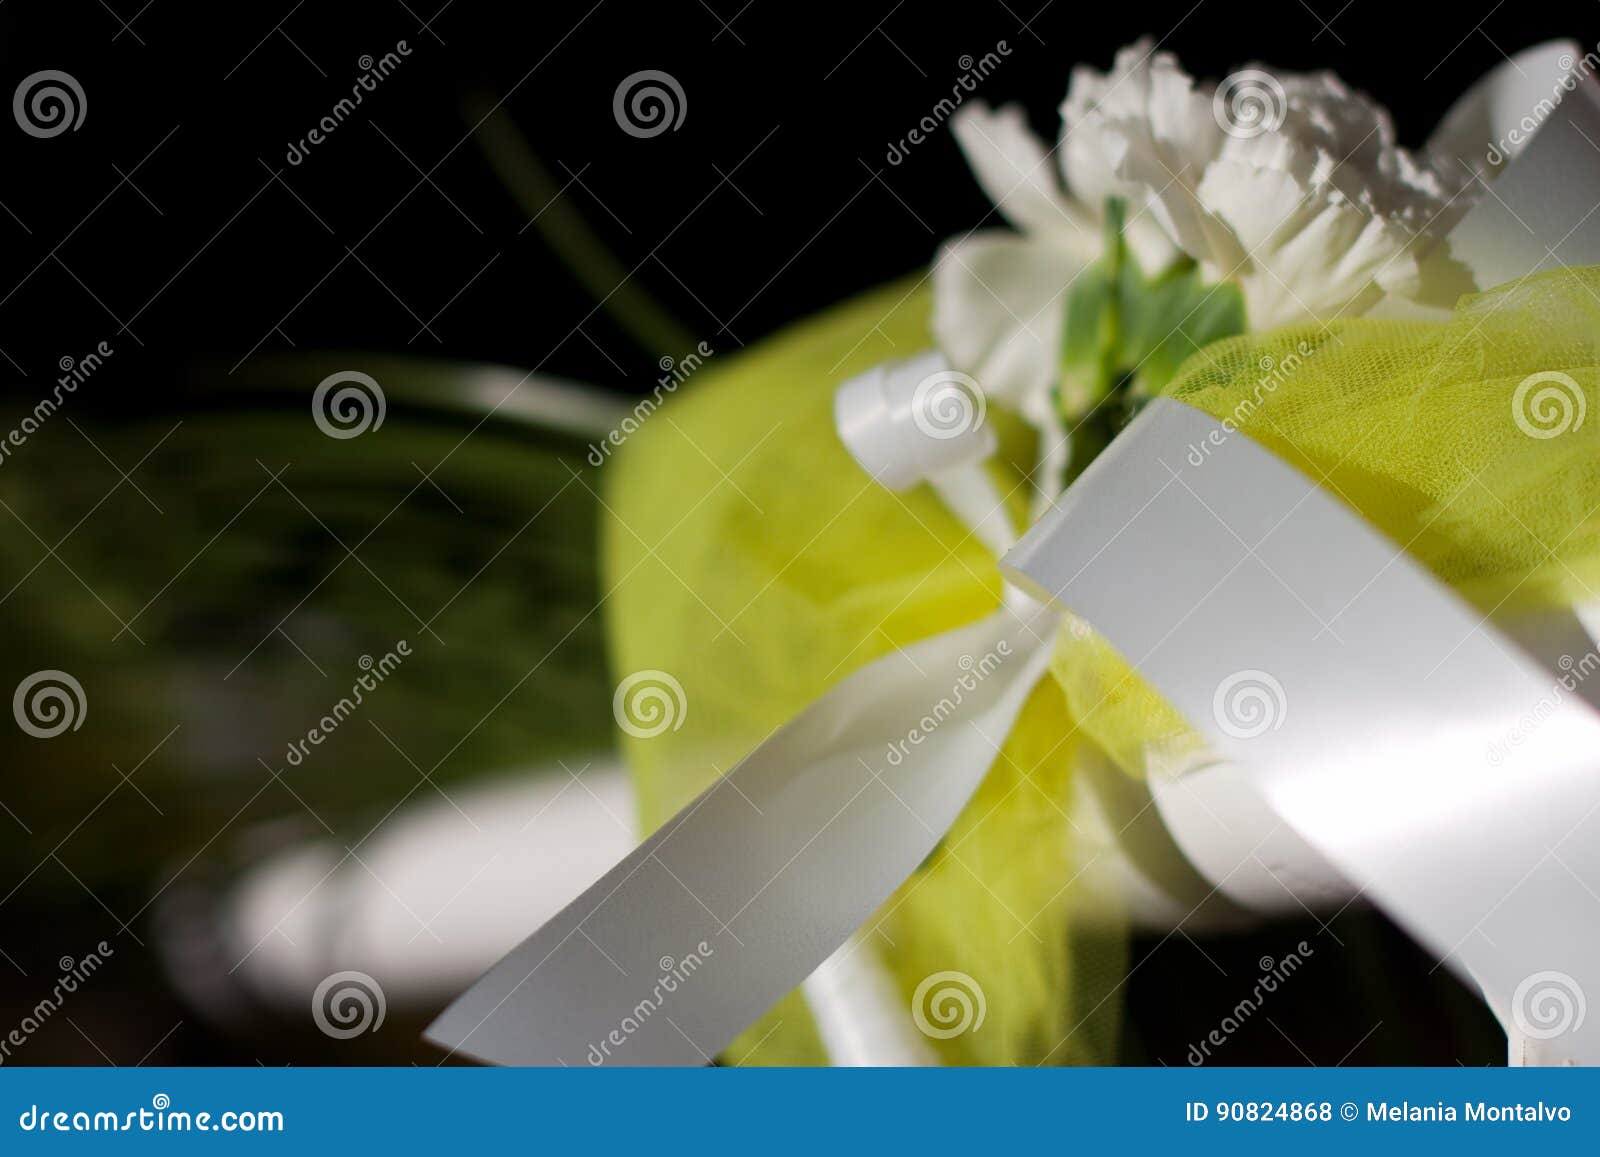 flower details for the wedding